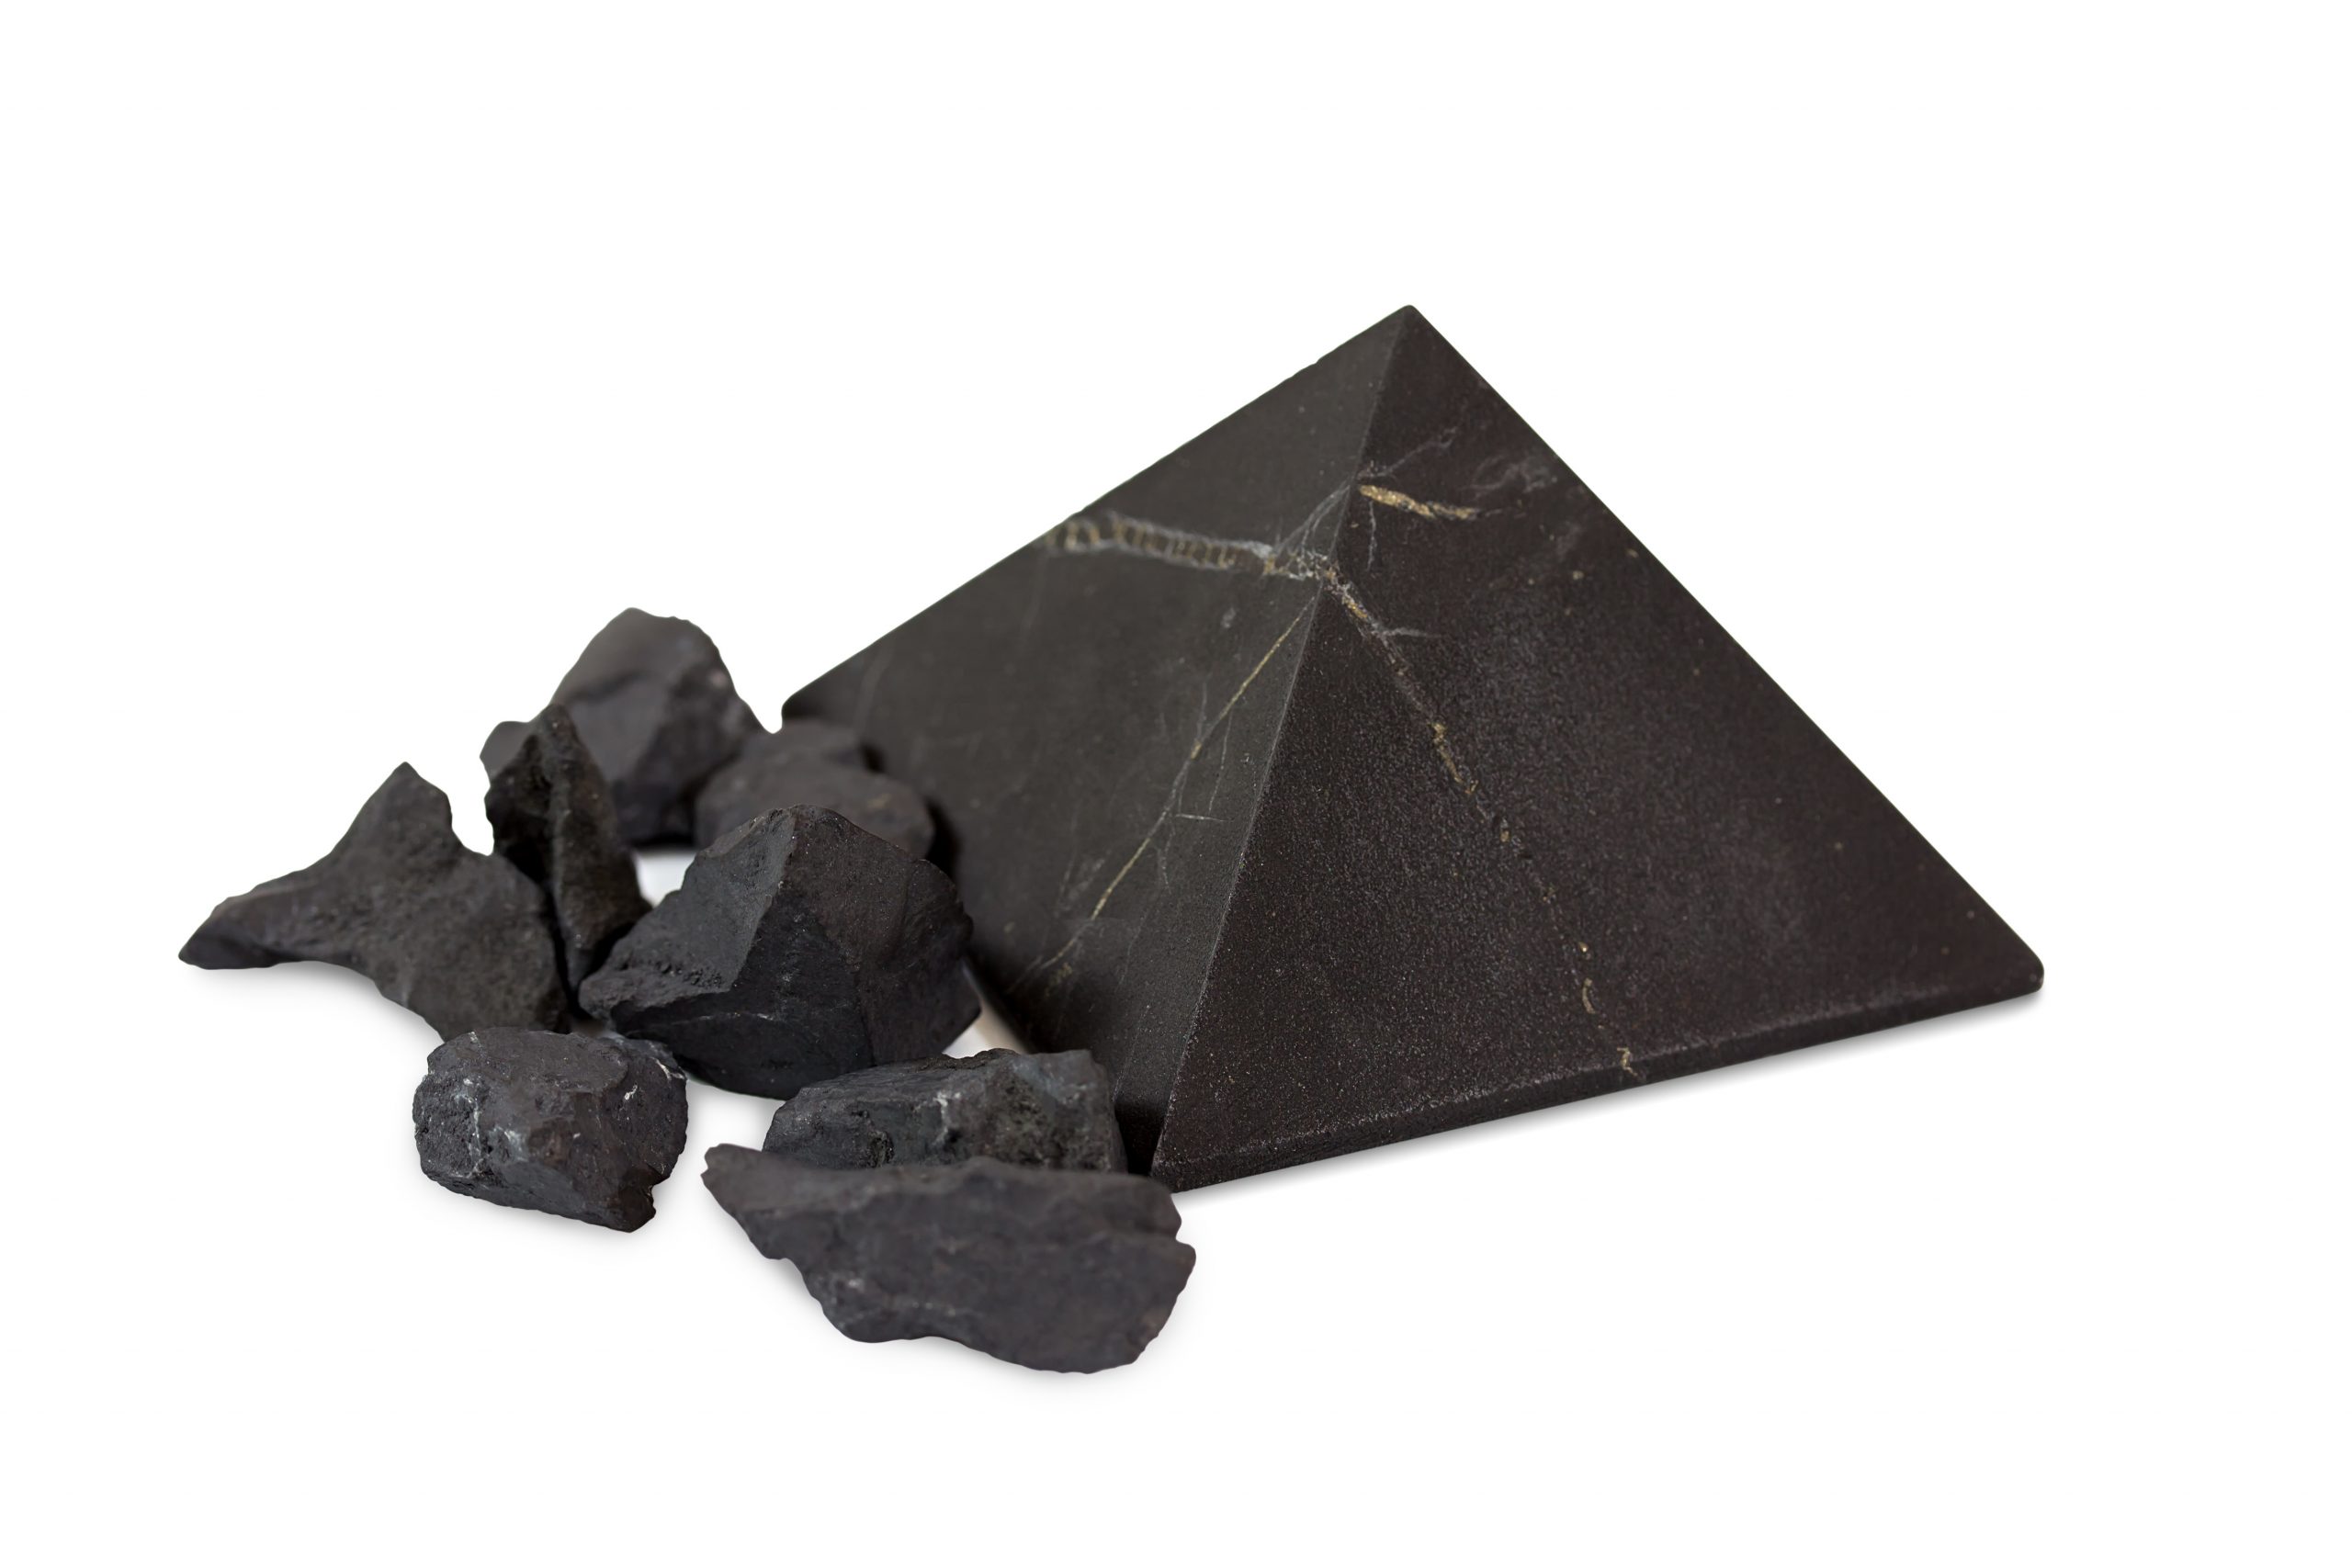 shungite stones and pyramid